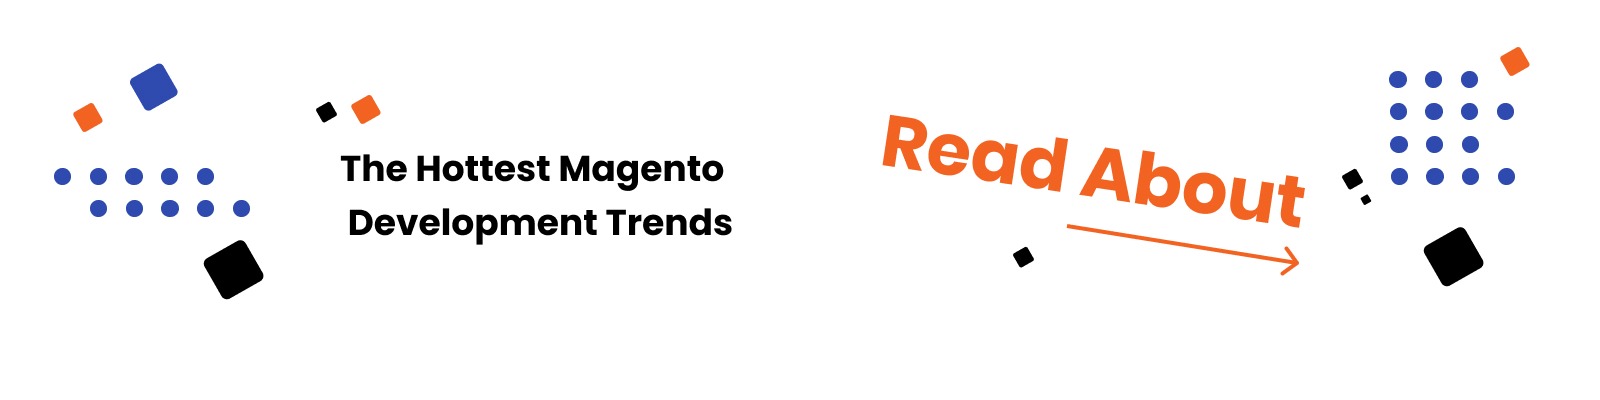 The Hottest Magento Development Trends 